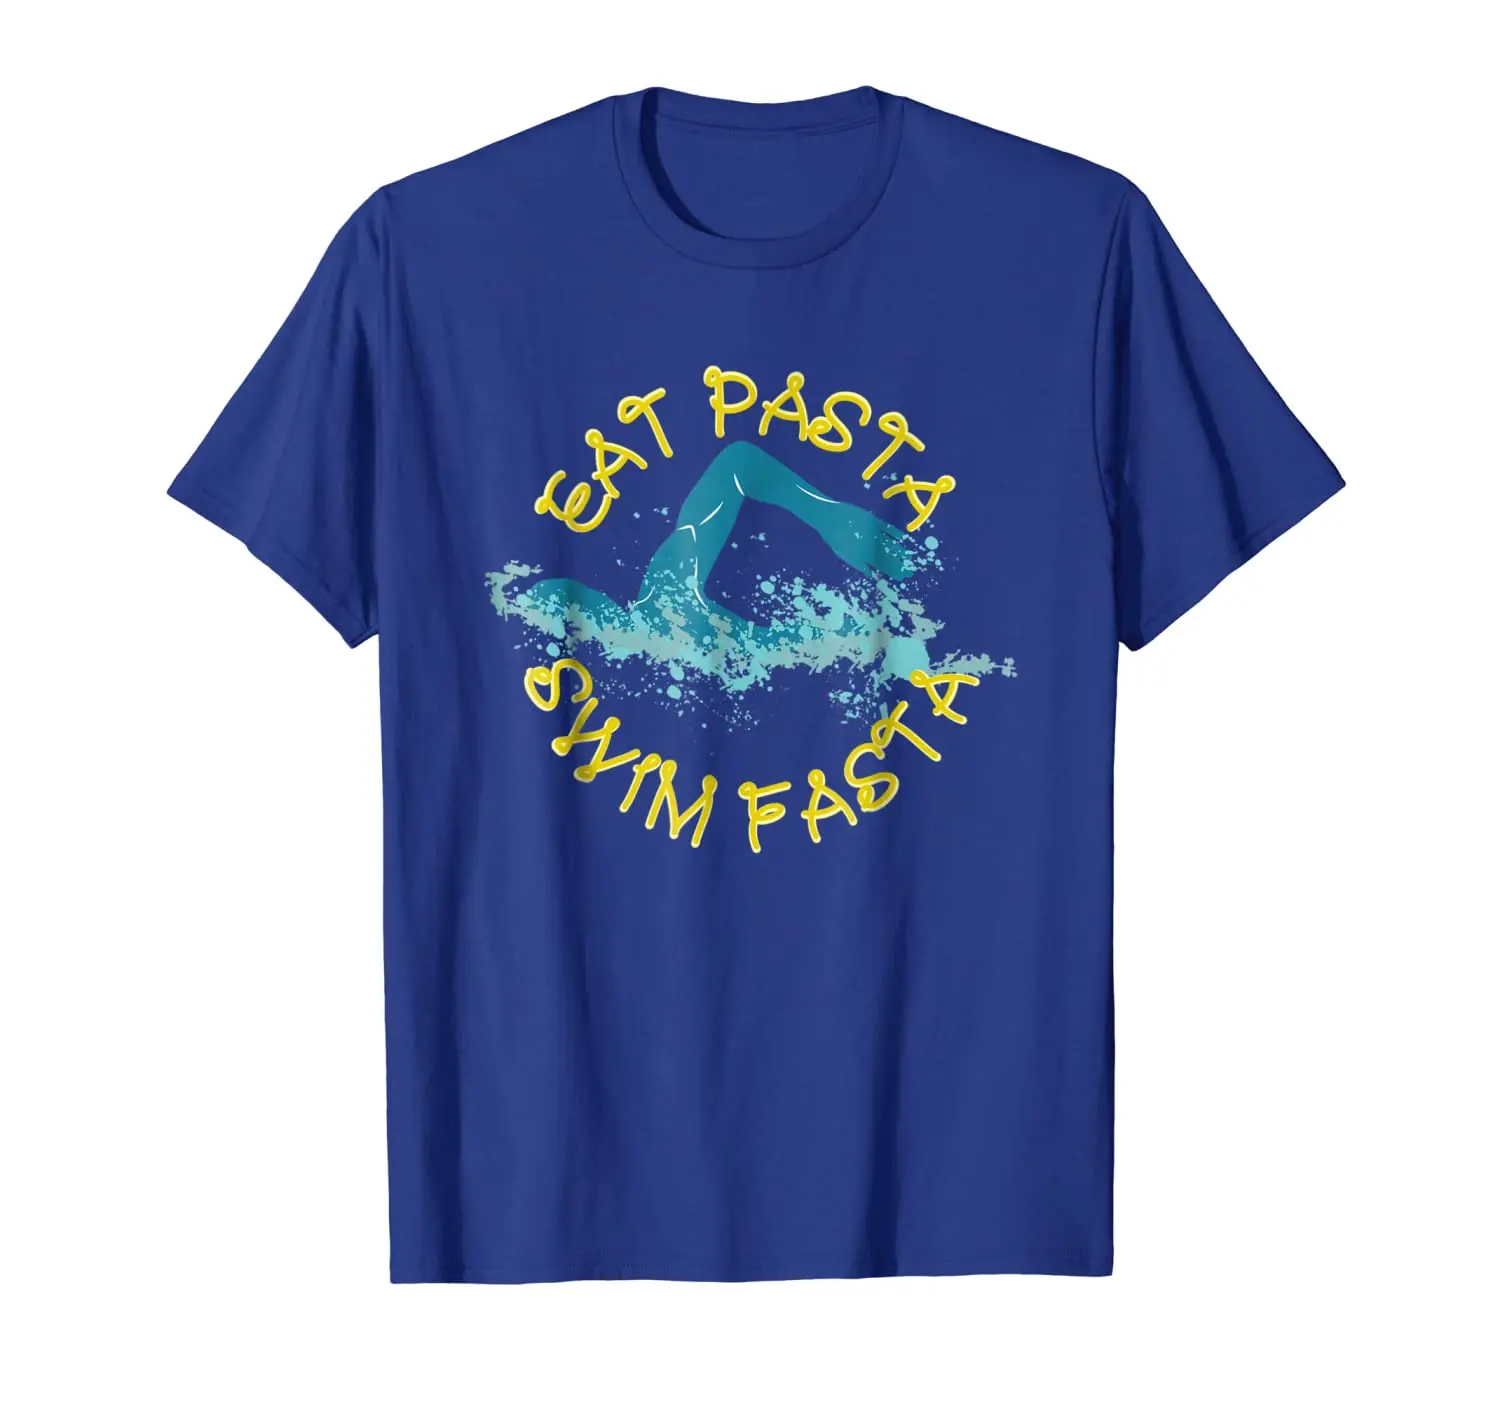 Jesti Testenine Plavati Fasta Plavanje Pun T-Shirt - Smešno Plavati Pun